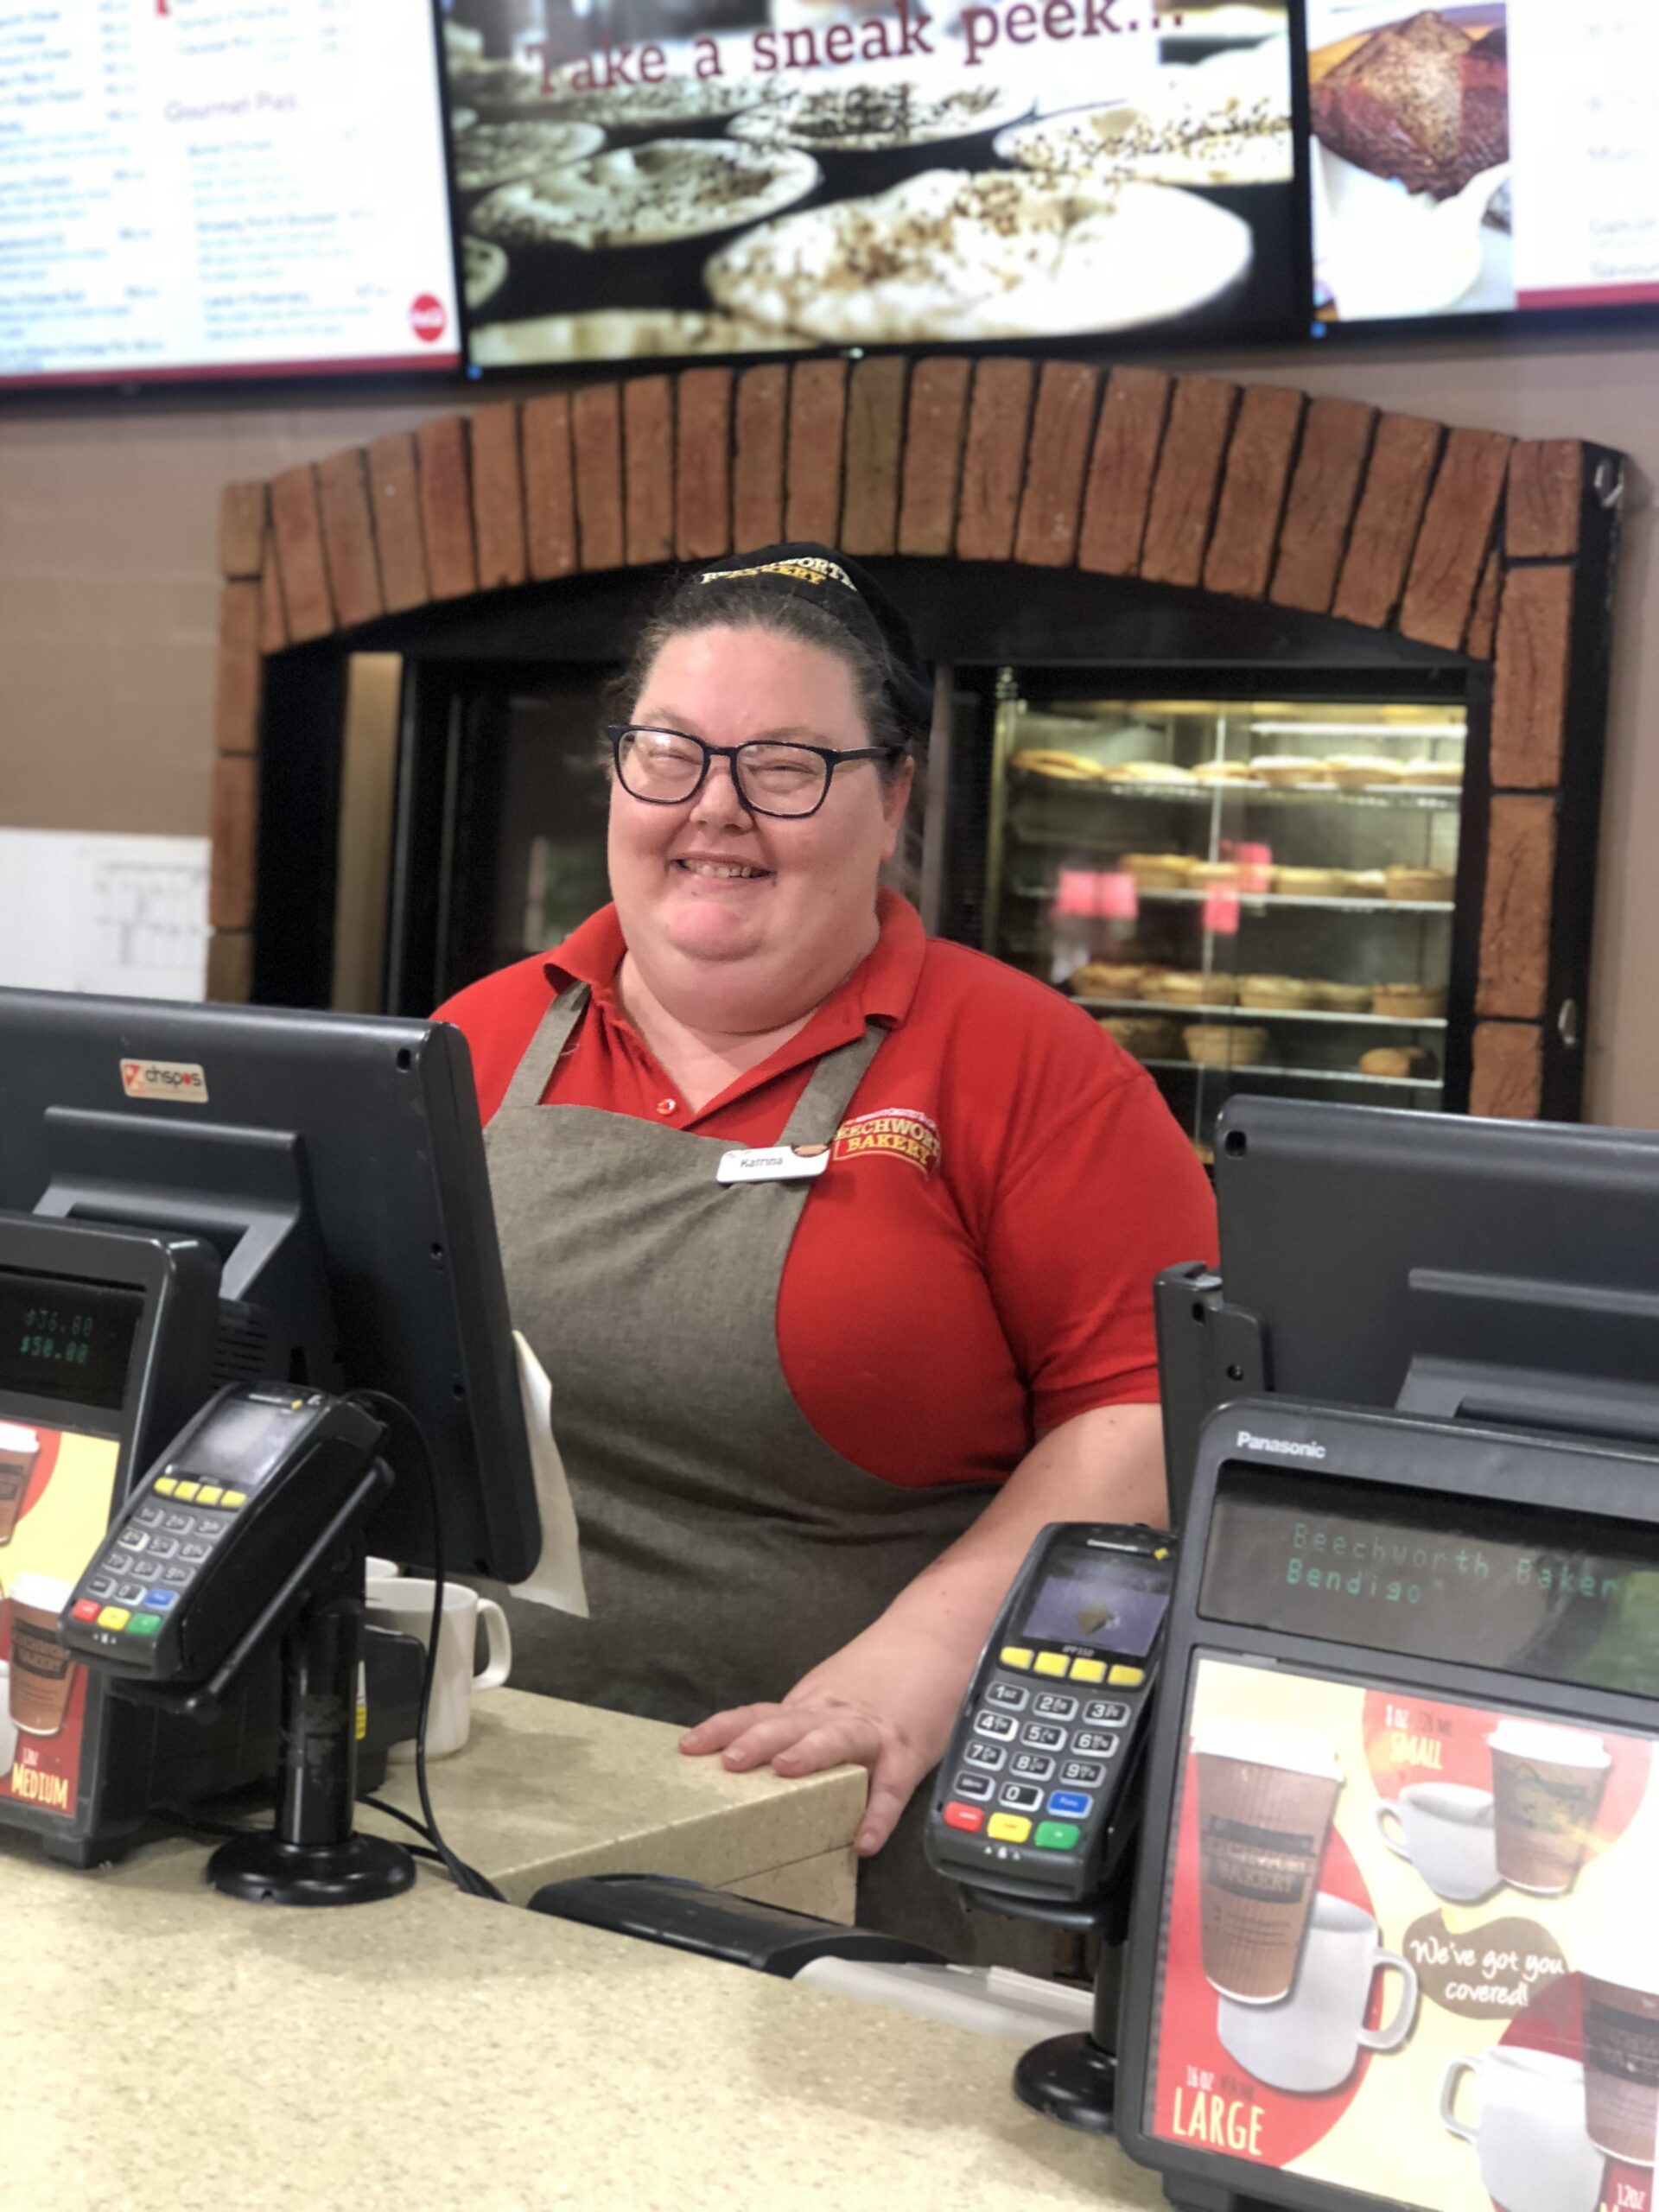 Katrina dressed in her beechworth bakery uniform standing behind the cash register